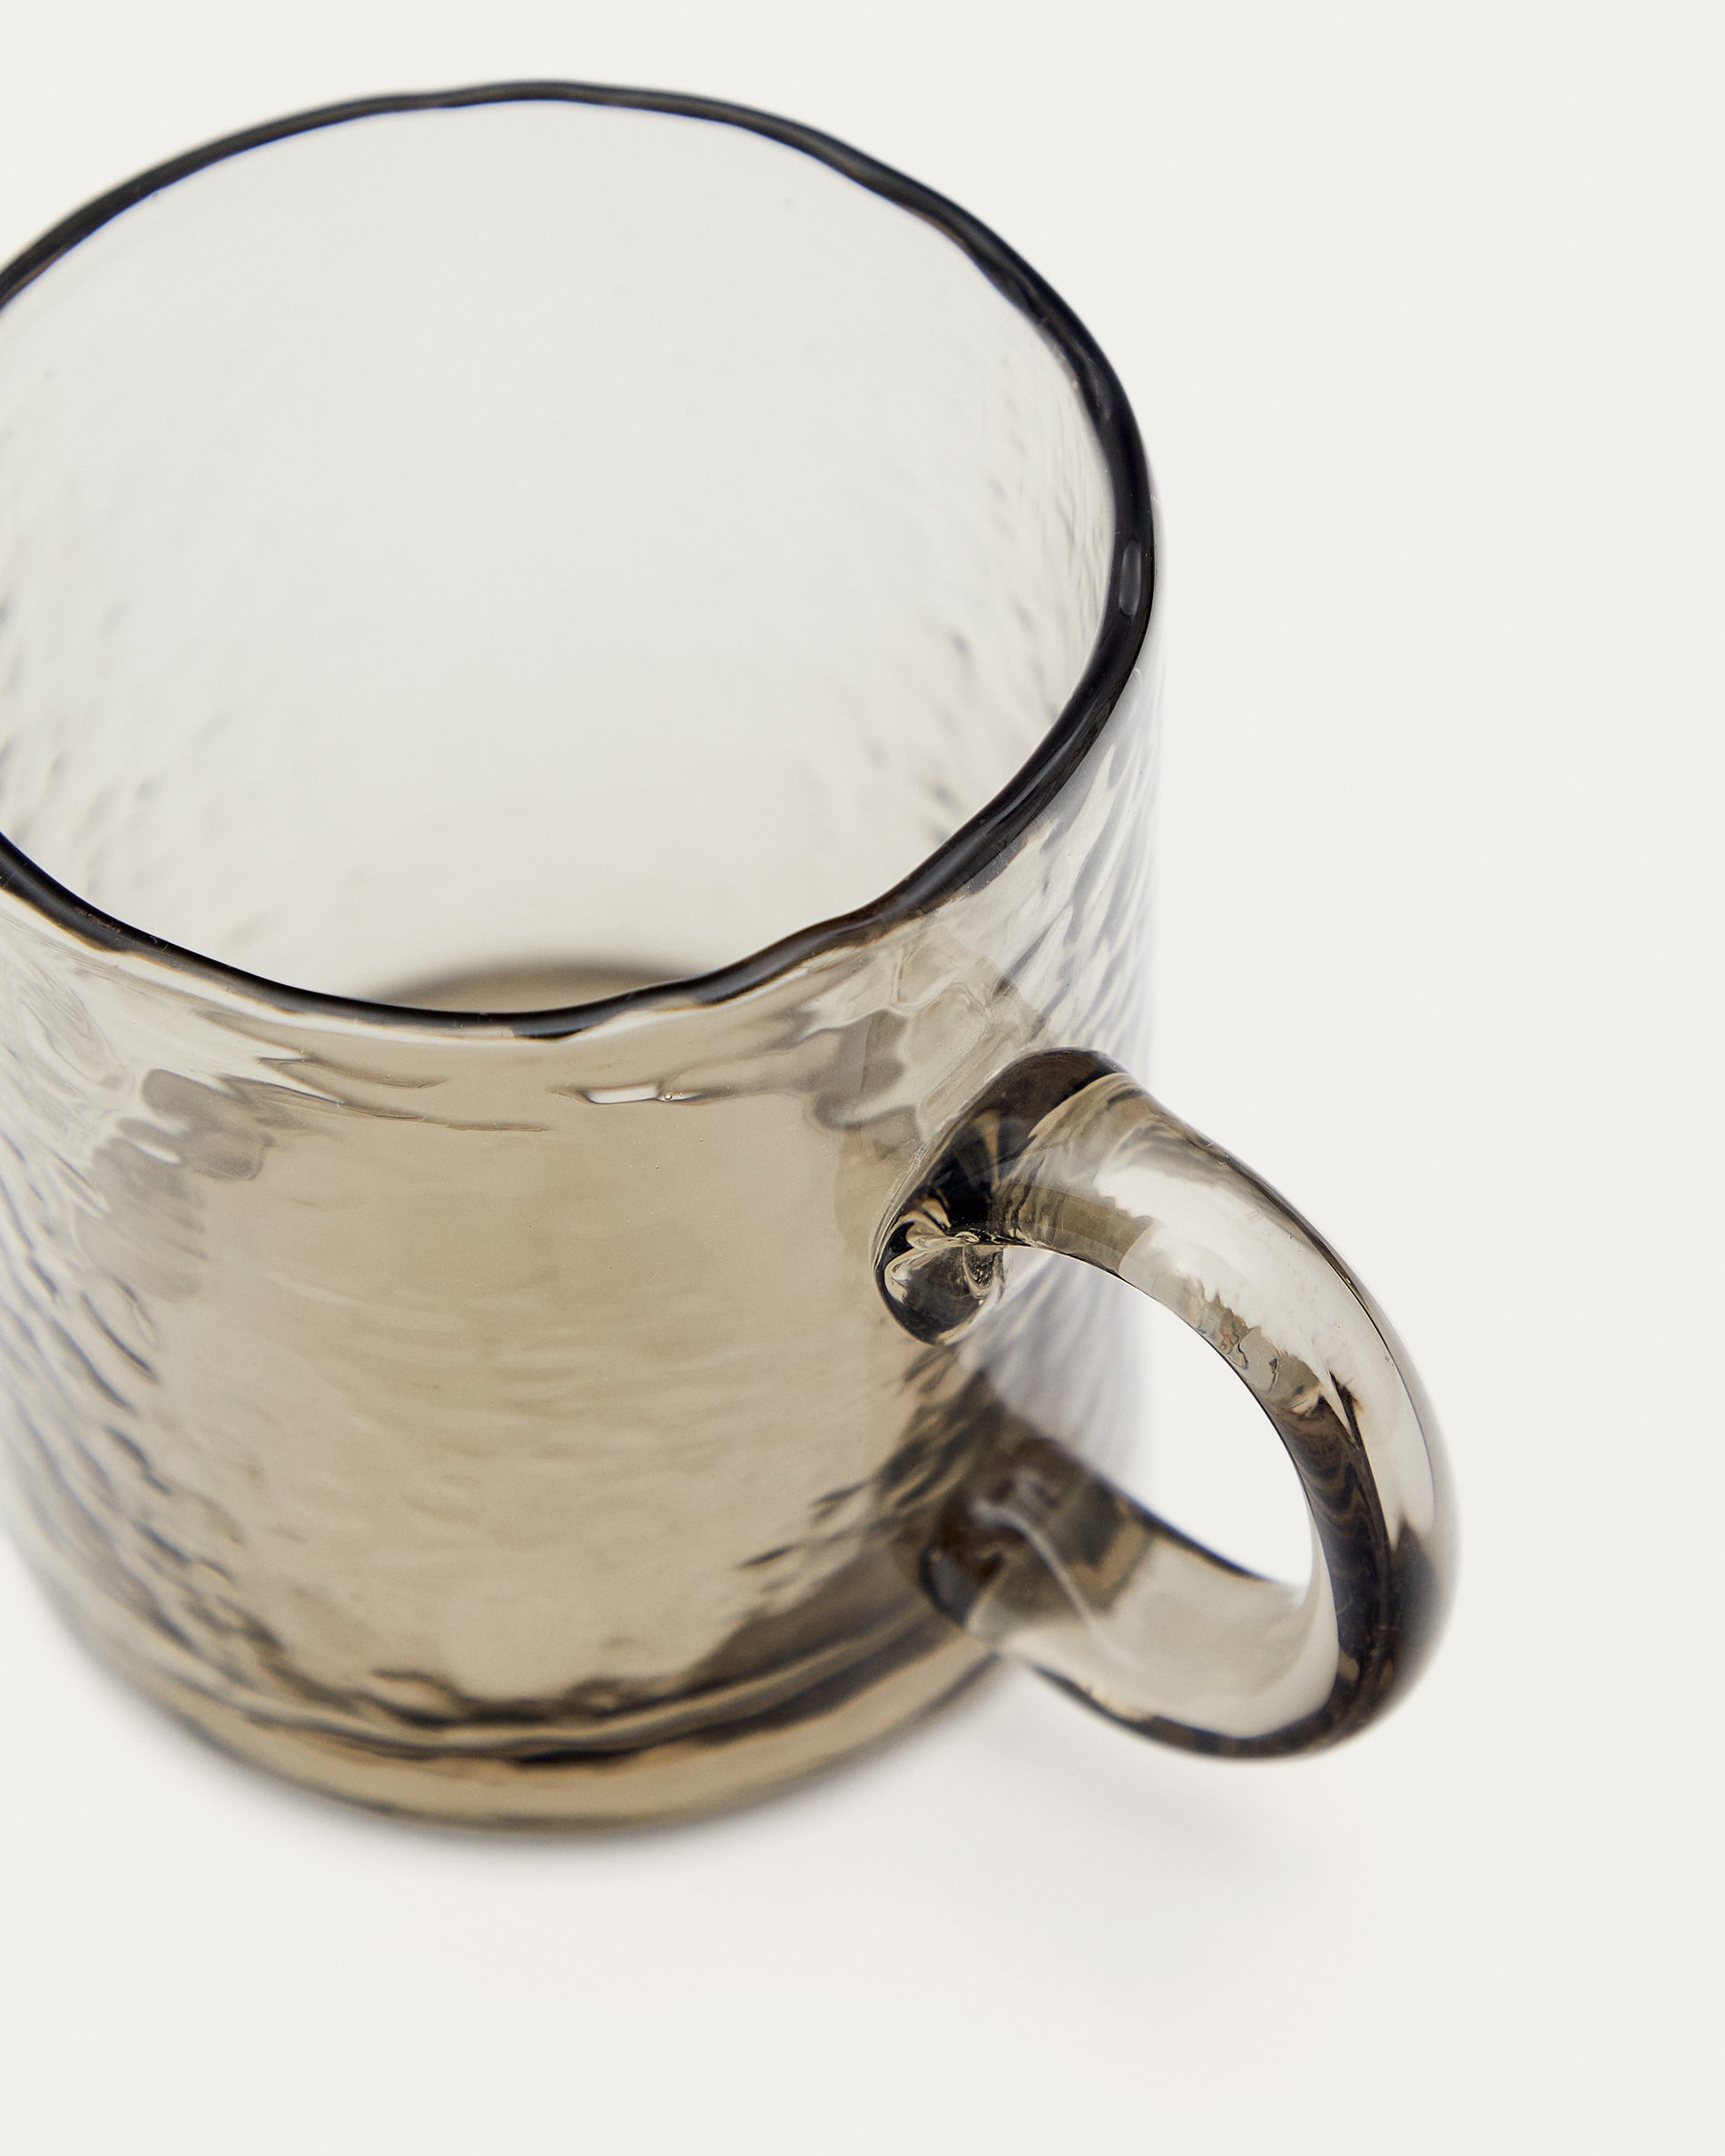 Sunera large mug, made of brown recycled glass